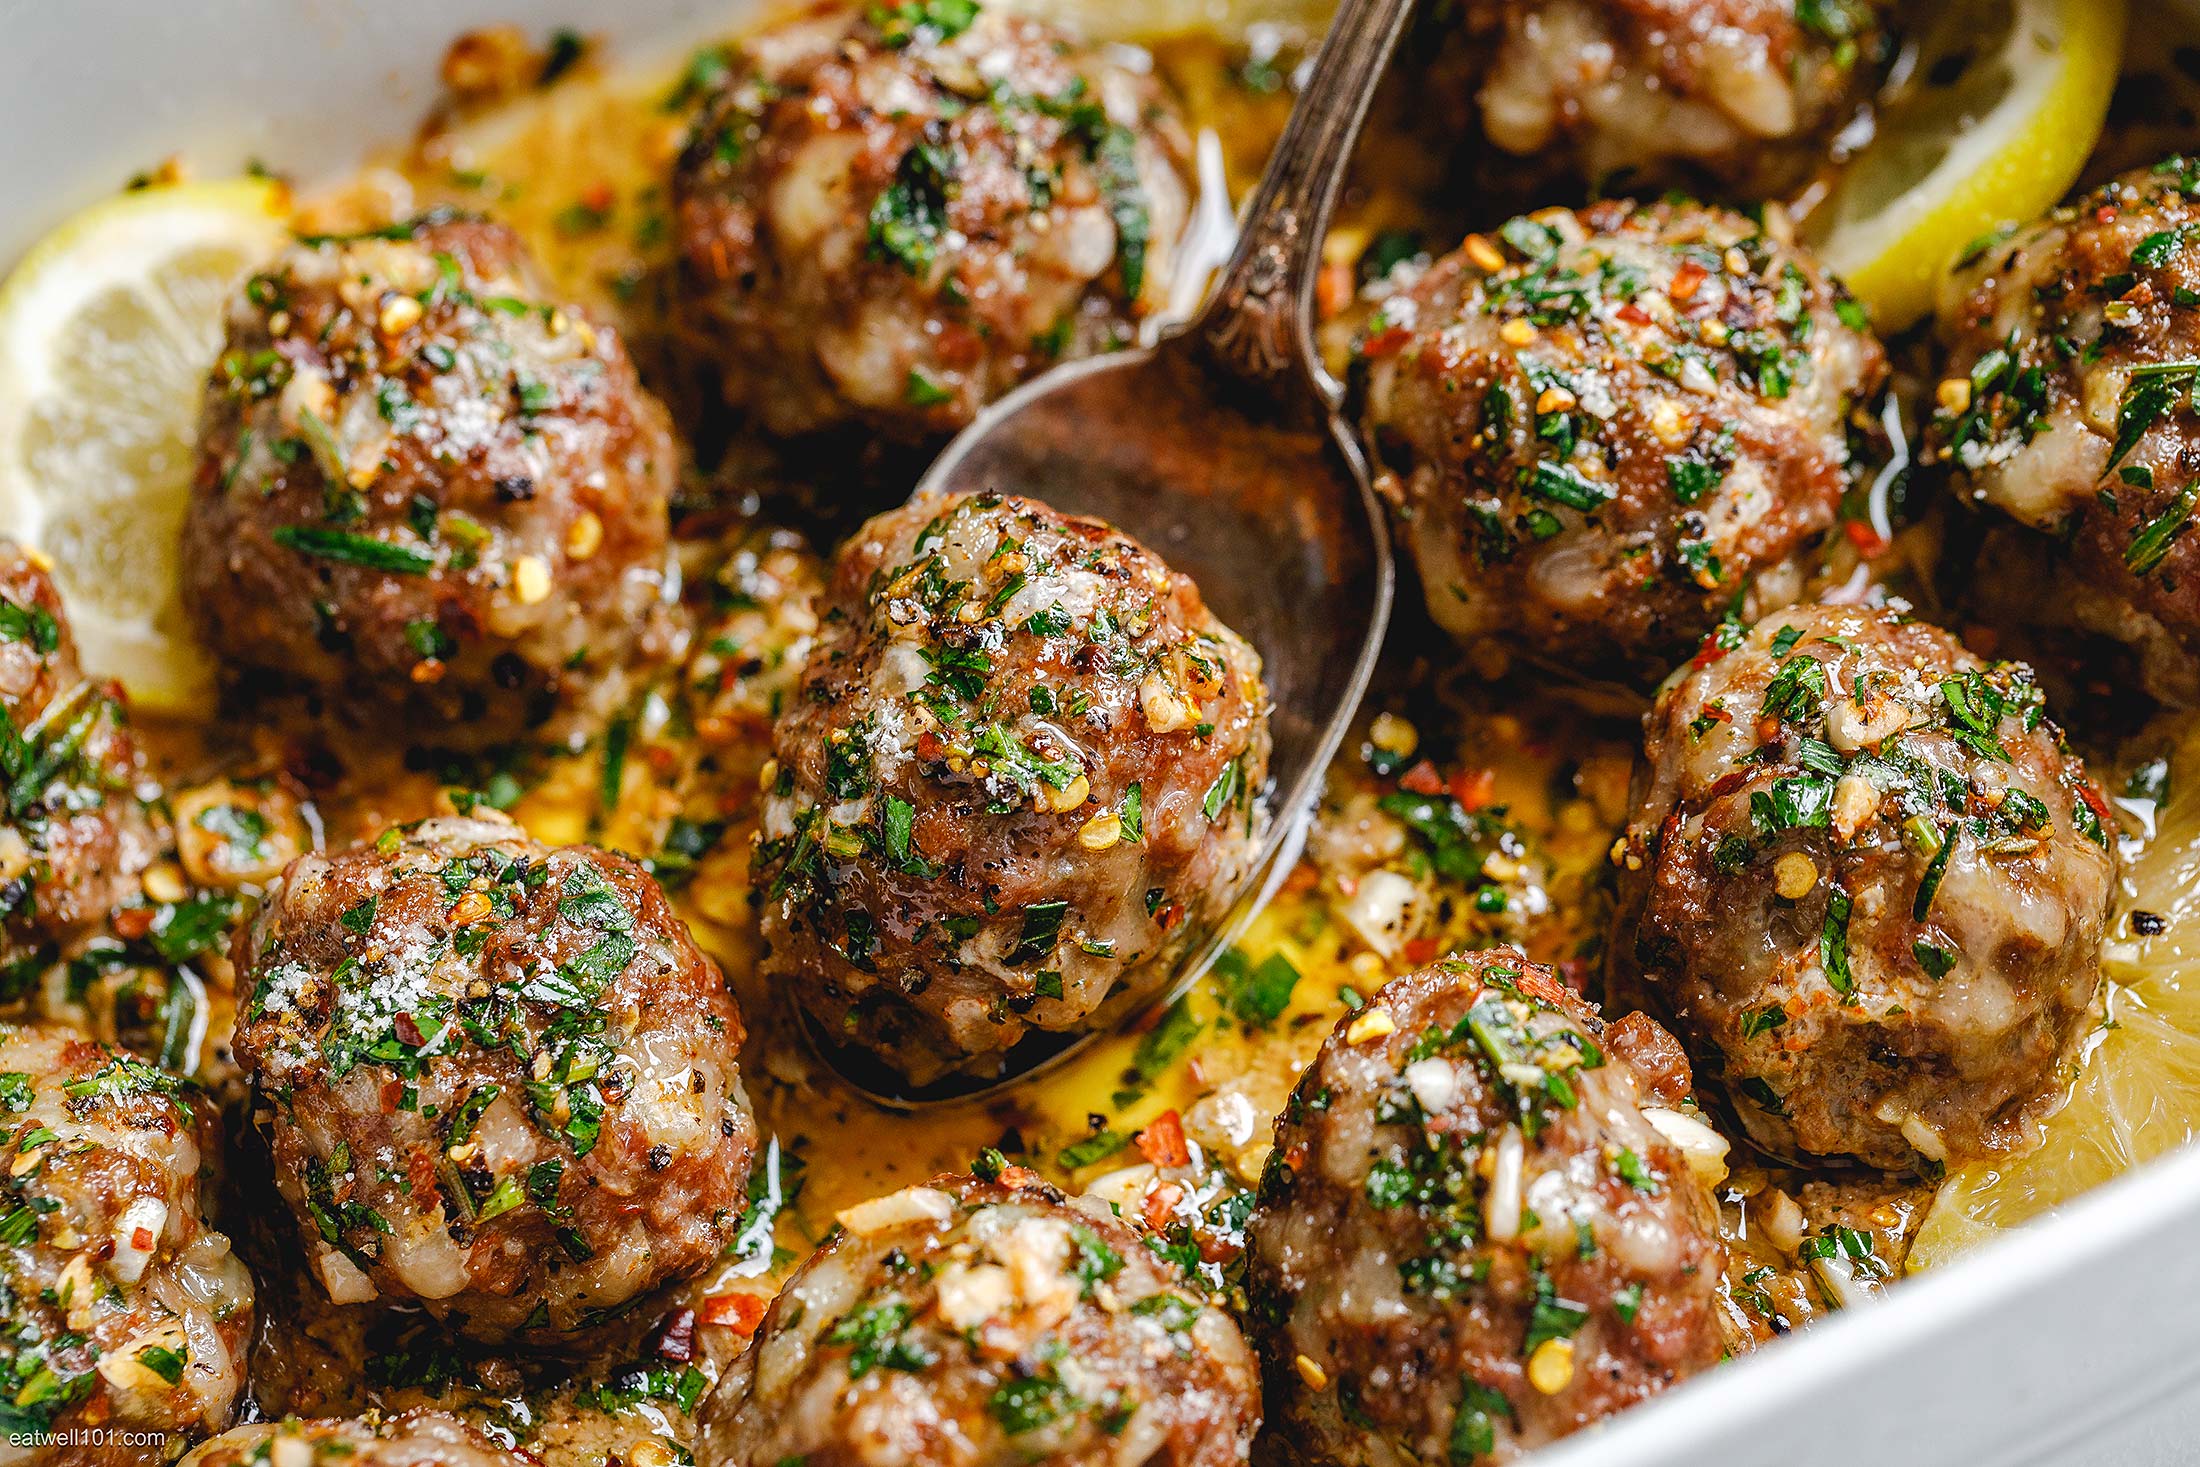 Baked Turkey Meatballs Recipe With Lemon Garlic Butter Sauce Oven Baked Turkey Meatballs Recipe Eatwell101